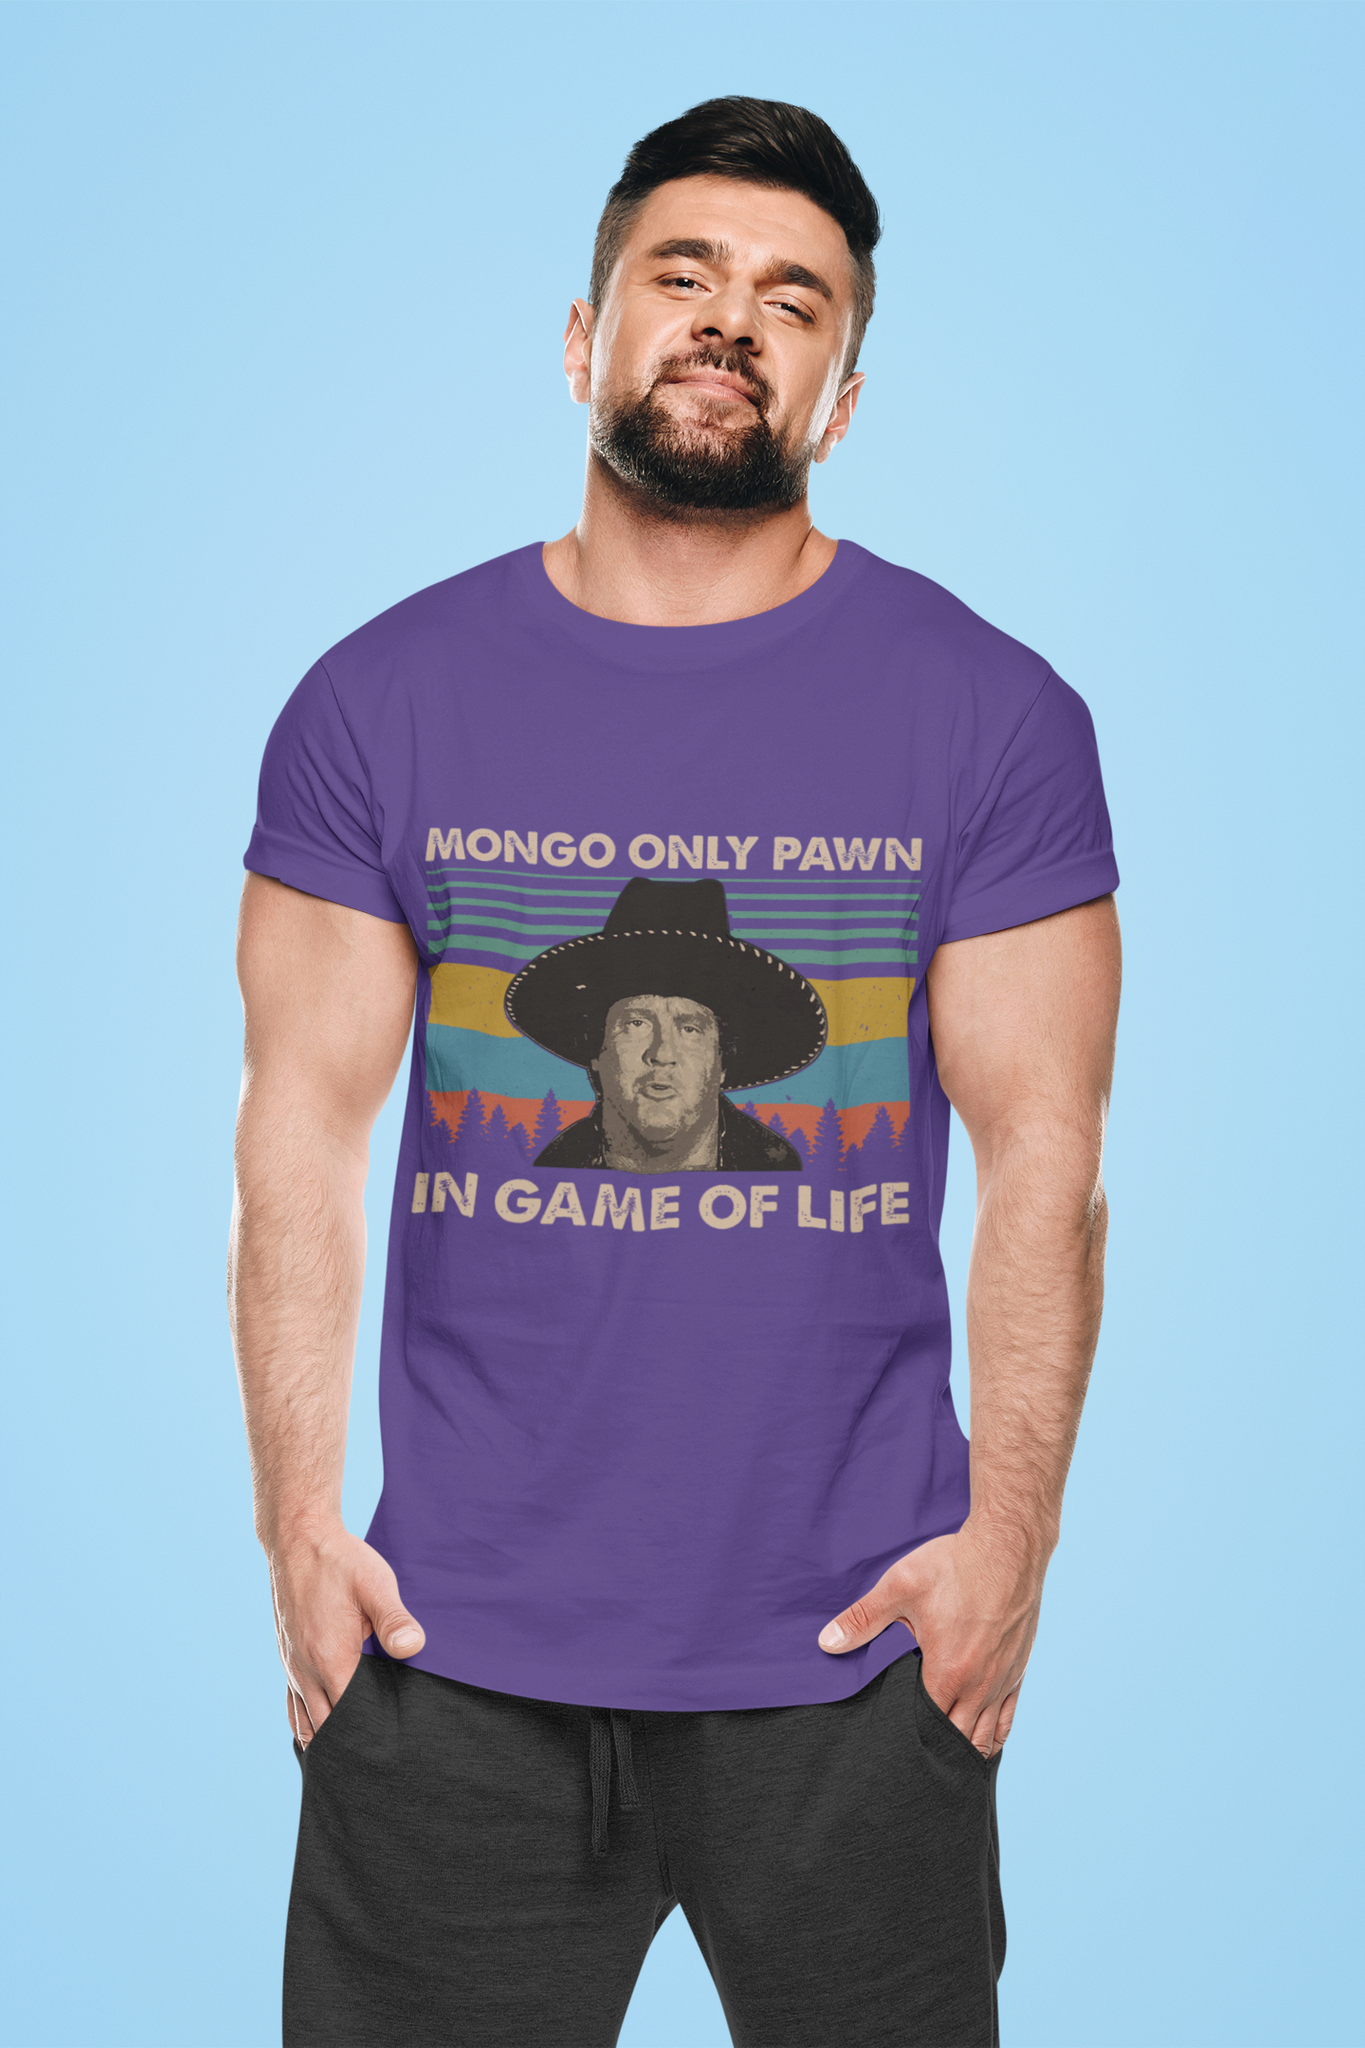 Blazing Saddles Movie T Shirt, Mongo Tshirt, Mongo Only Pawn In Game Of Life T Shirt